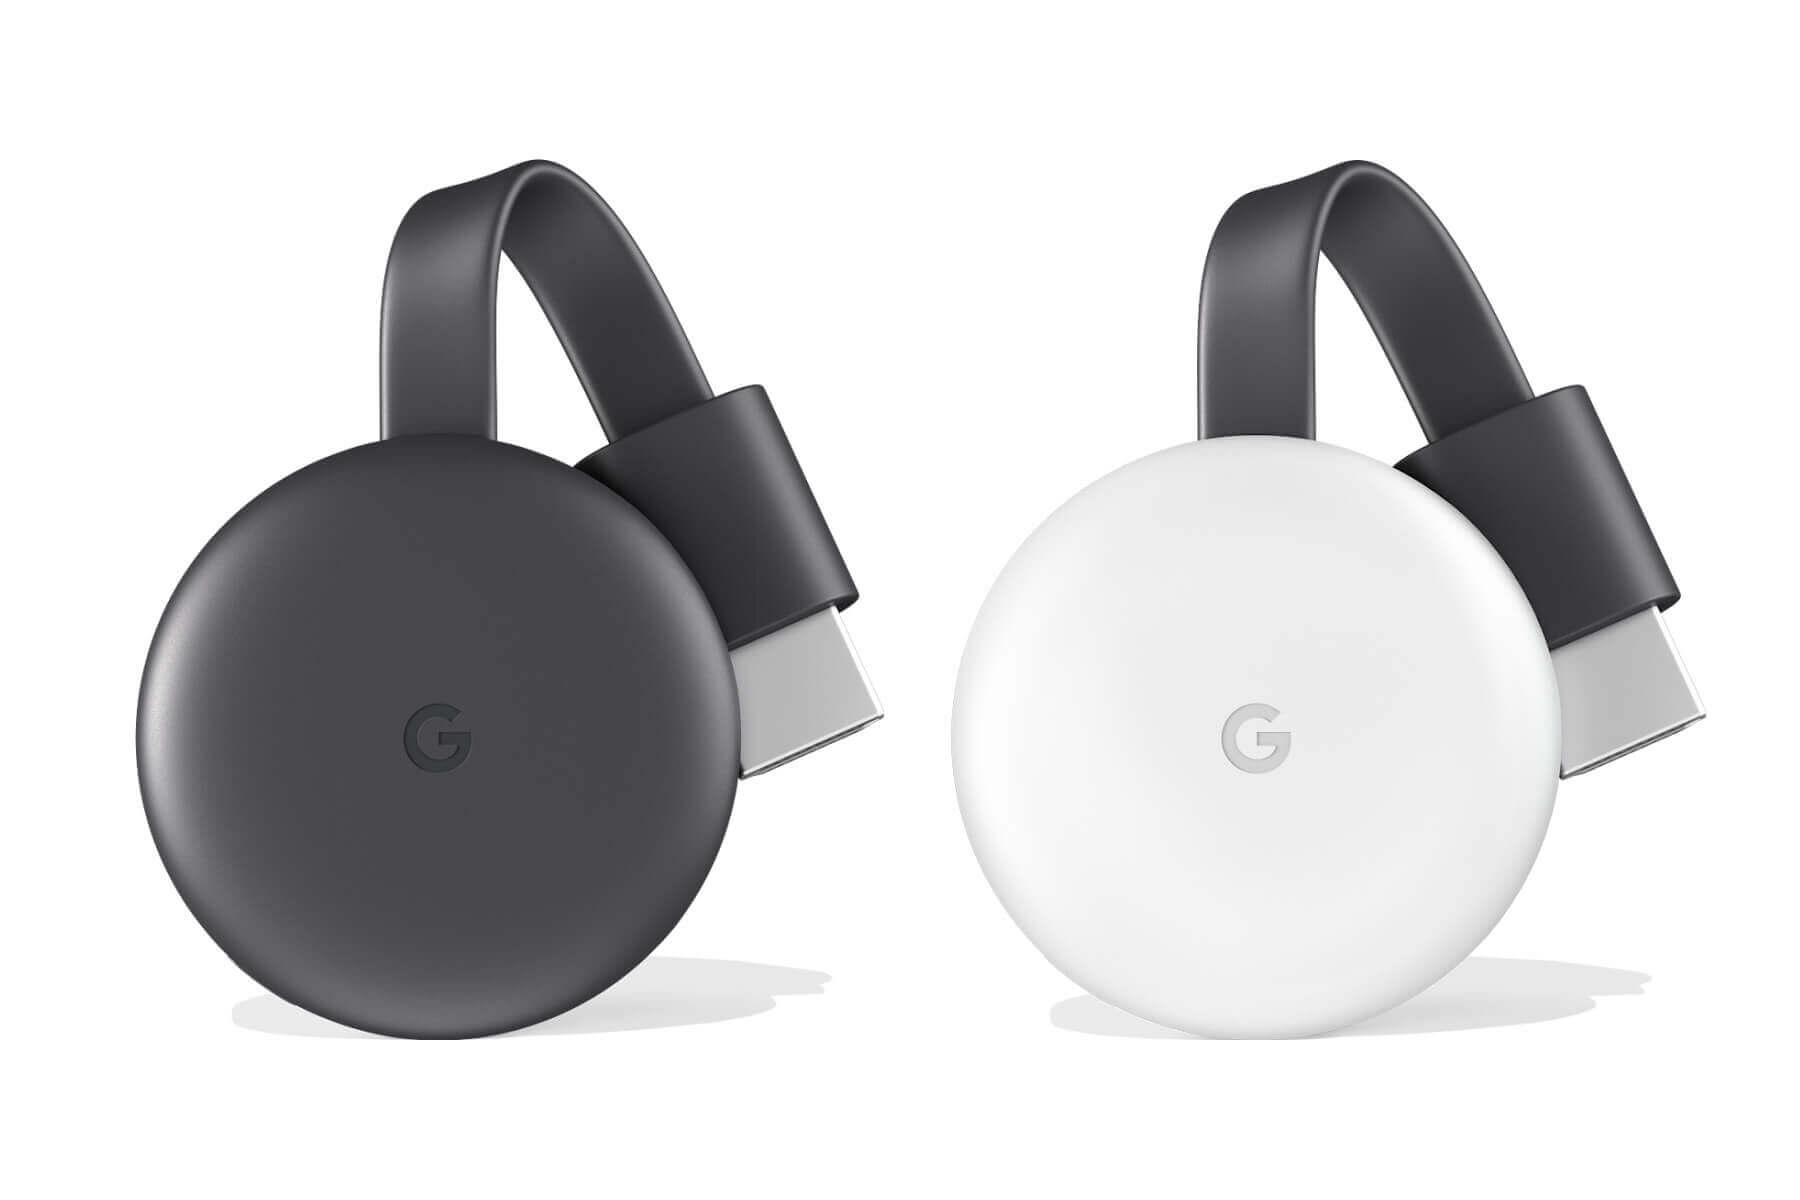 Google-Chromecast-3.0